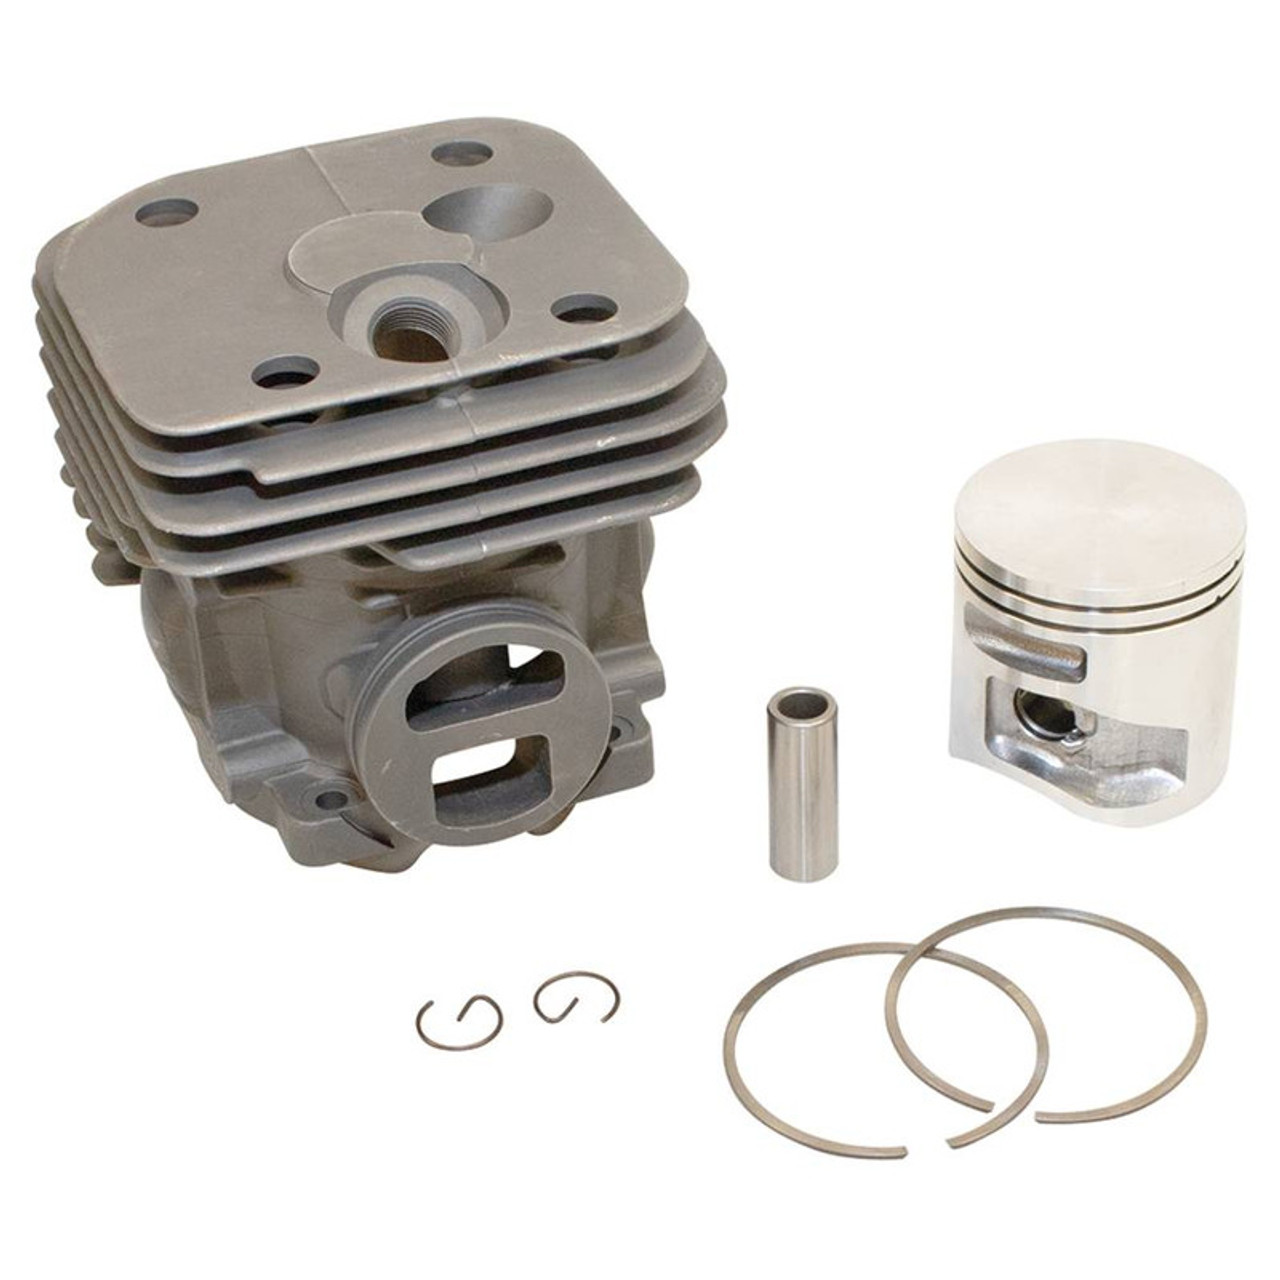 Engine Rebuild Kit for Husqvarna 372 X-TORQ chainsaw 575255701, 575255702 Piston, Rings, Cylinder